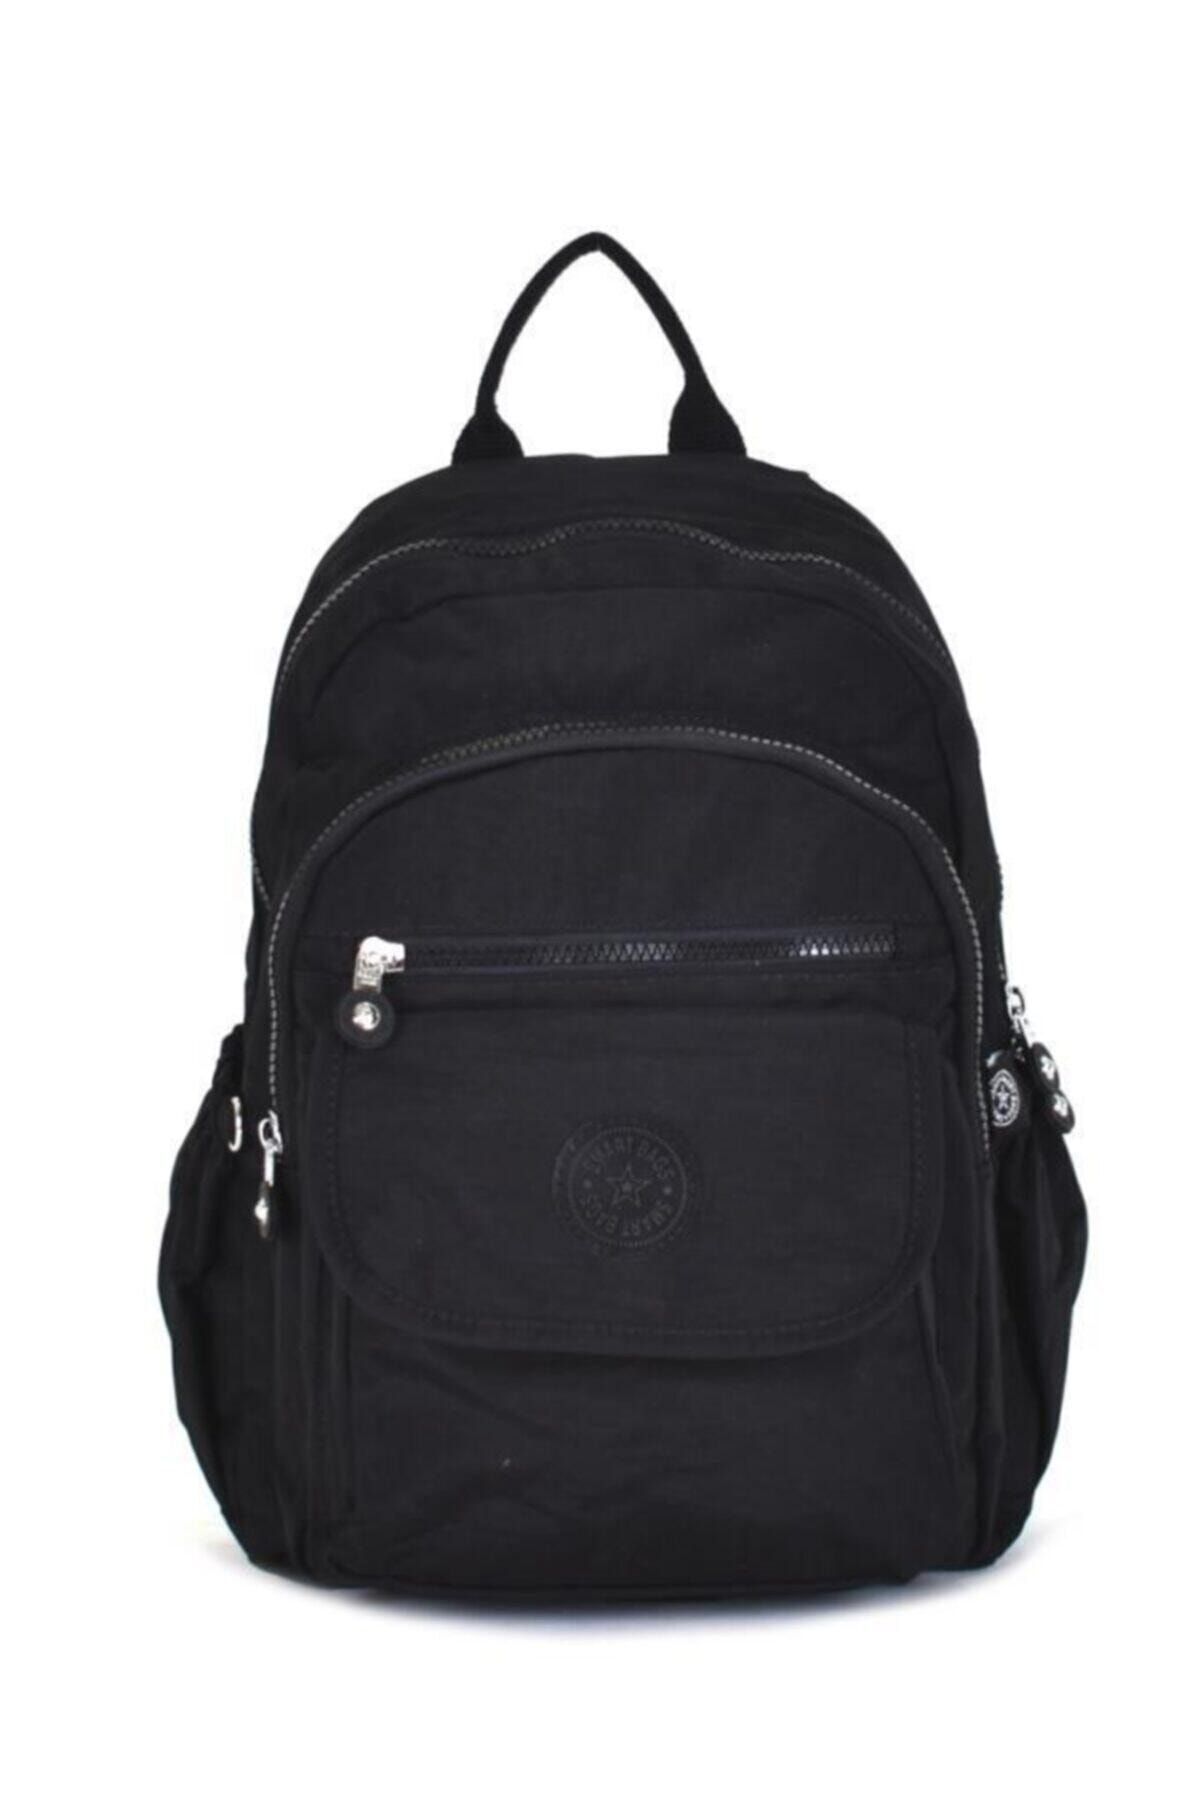 Smart Bags Smb1187 Siyah-0001 Kadın Sırt Çantası